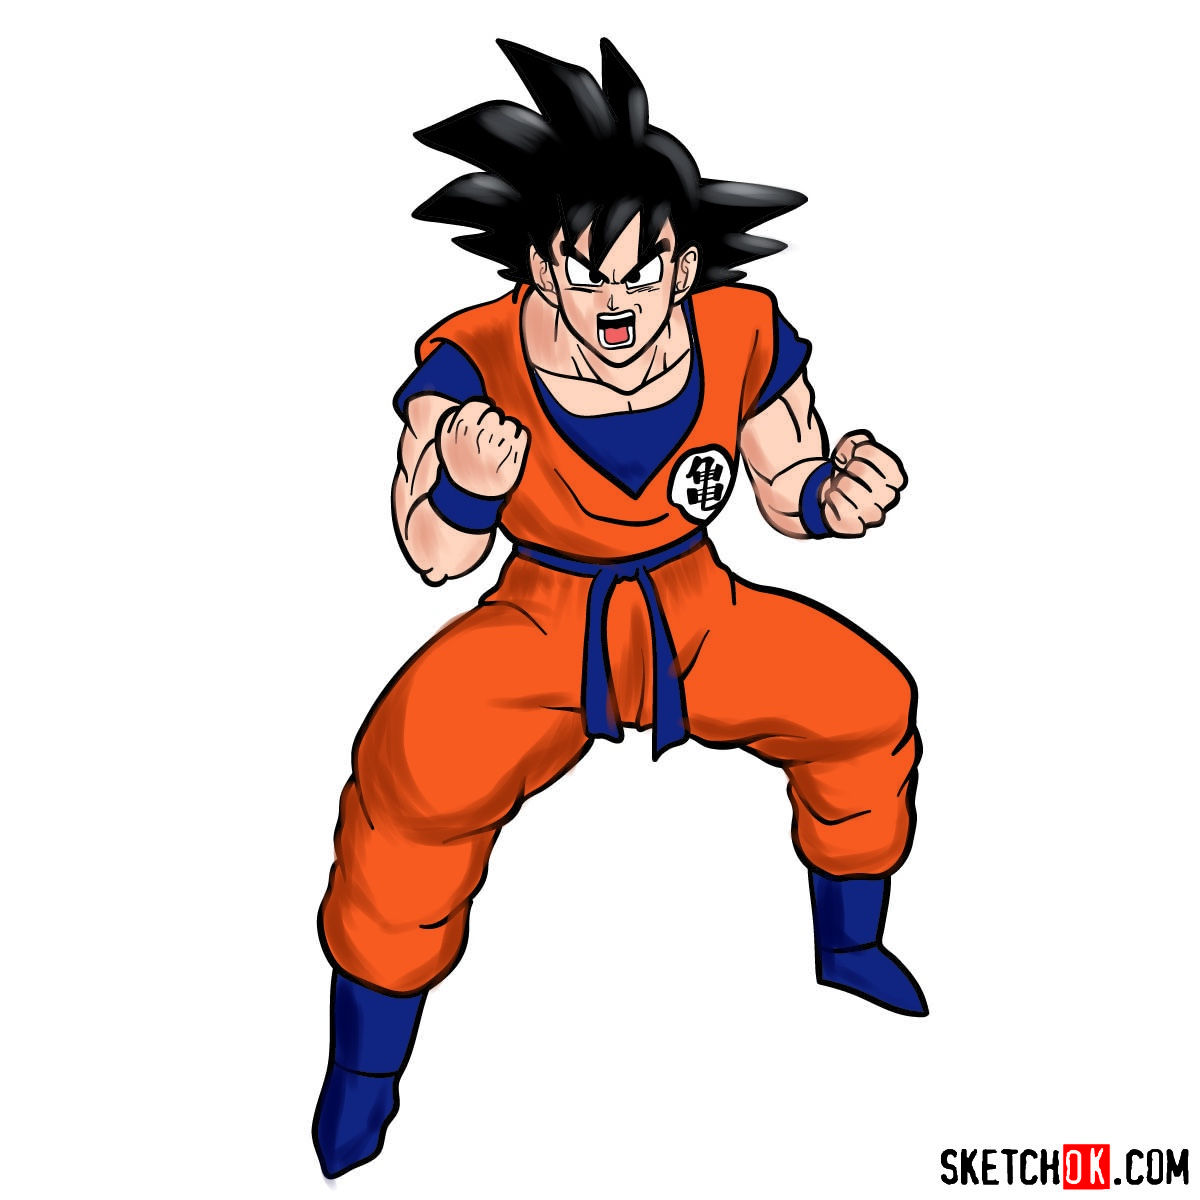 How to draw Goku | Dragon Ball anime - Sketchok easy drawing guides